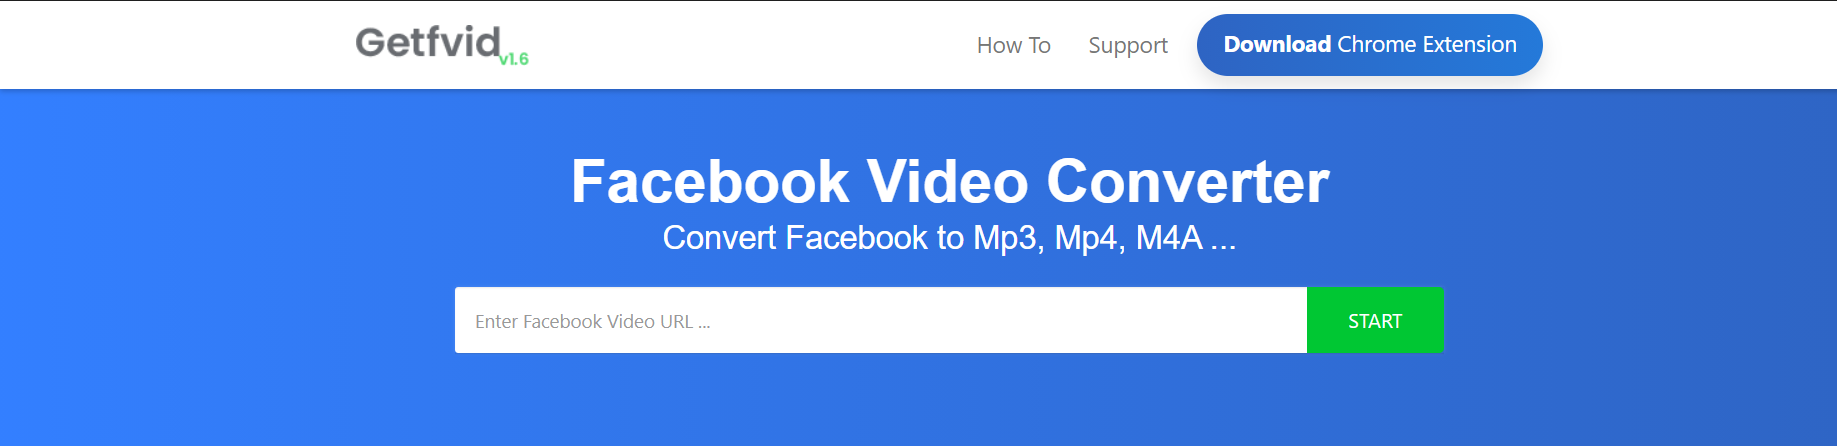 getfvid com facebook video downloader